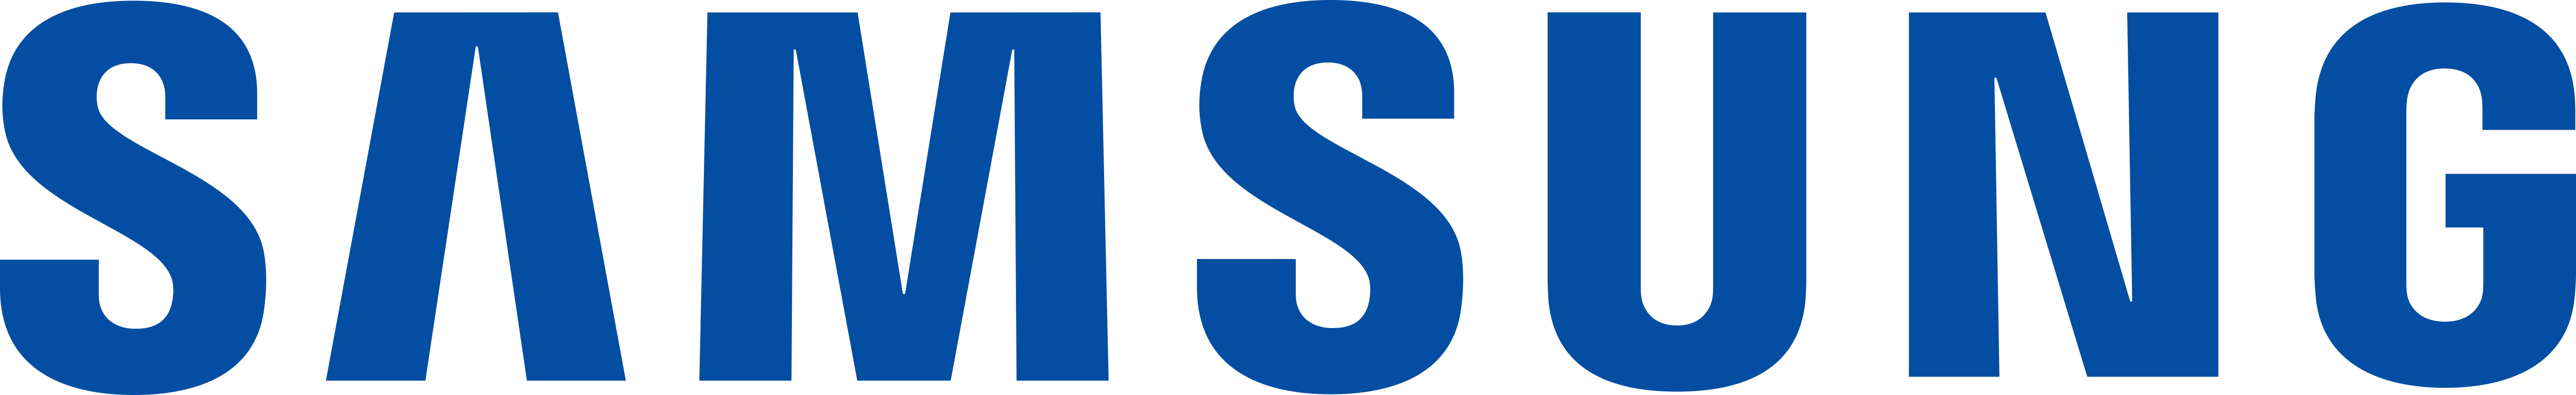 samsung logo history